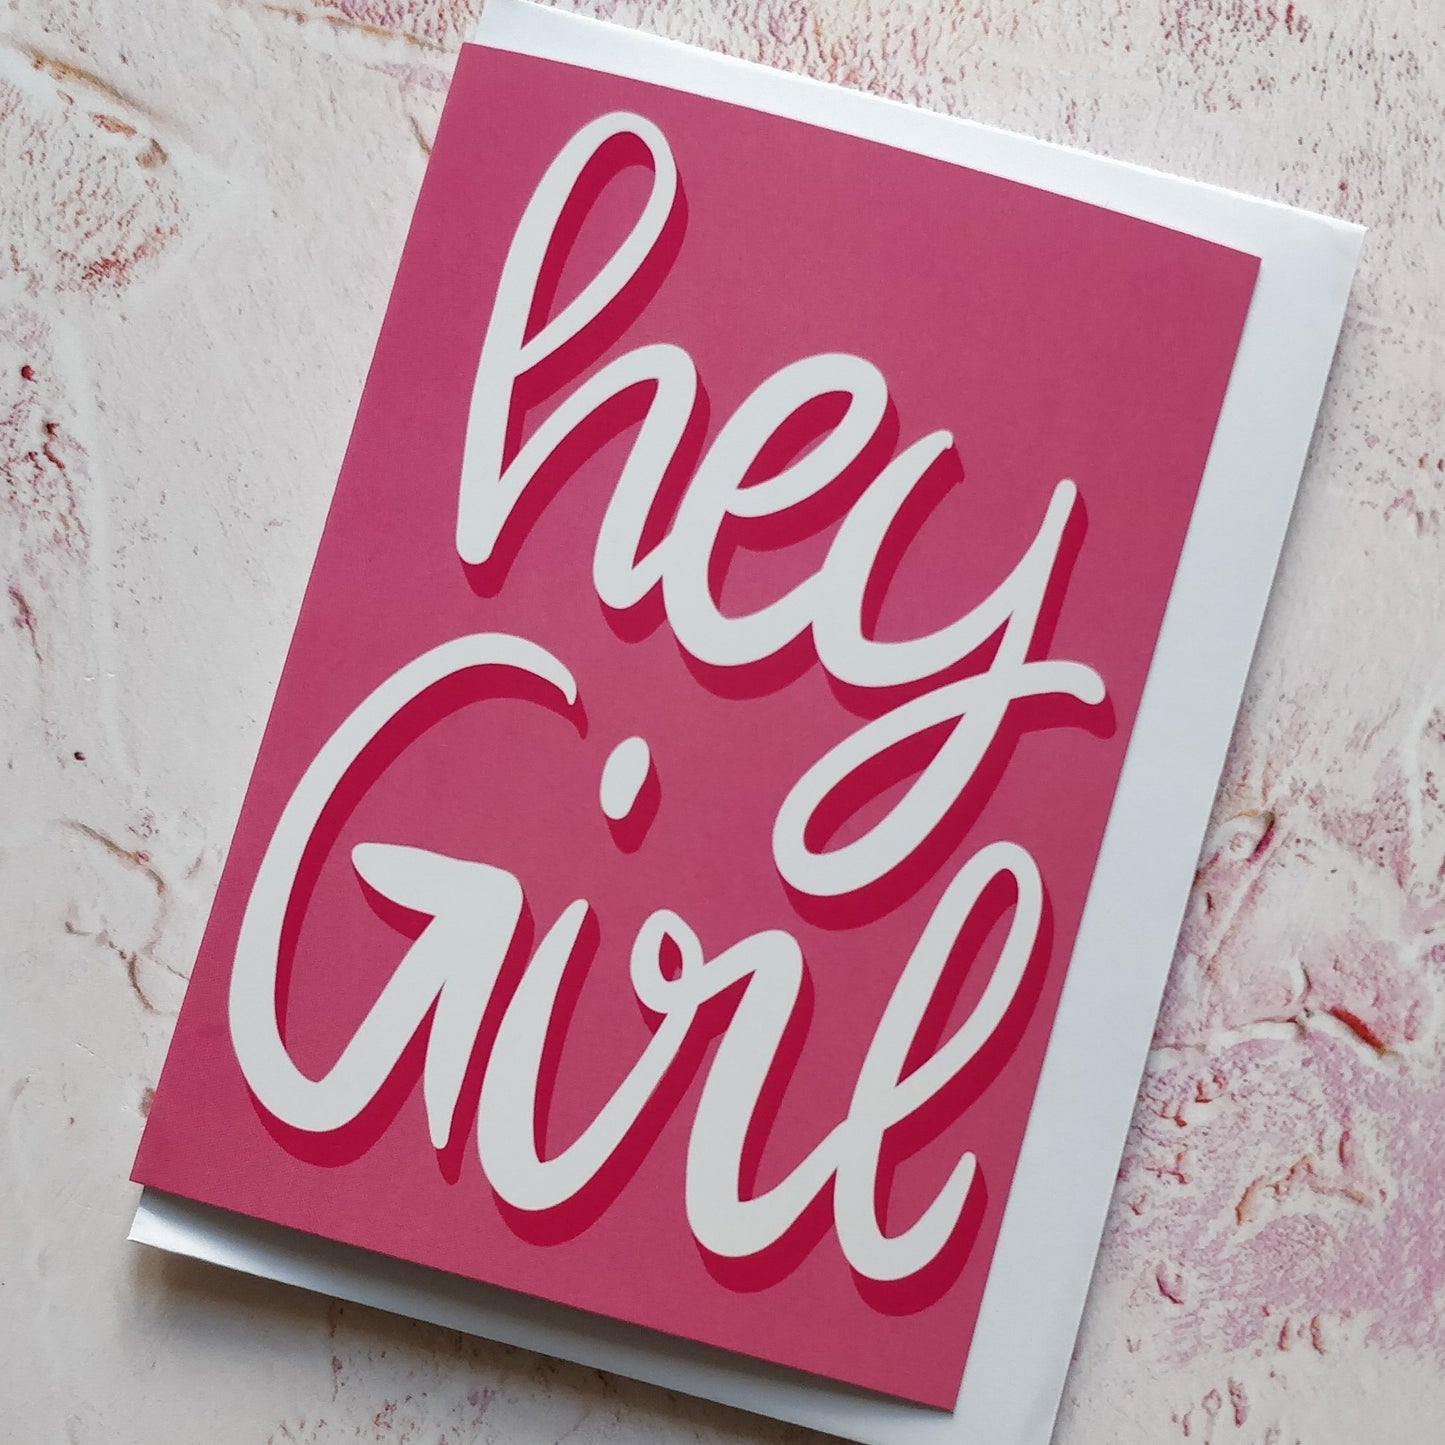 Hey Girl Greeting Card - Fay Dixon Design